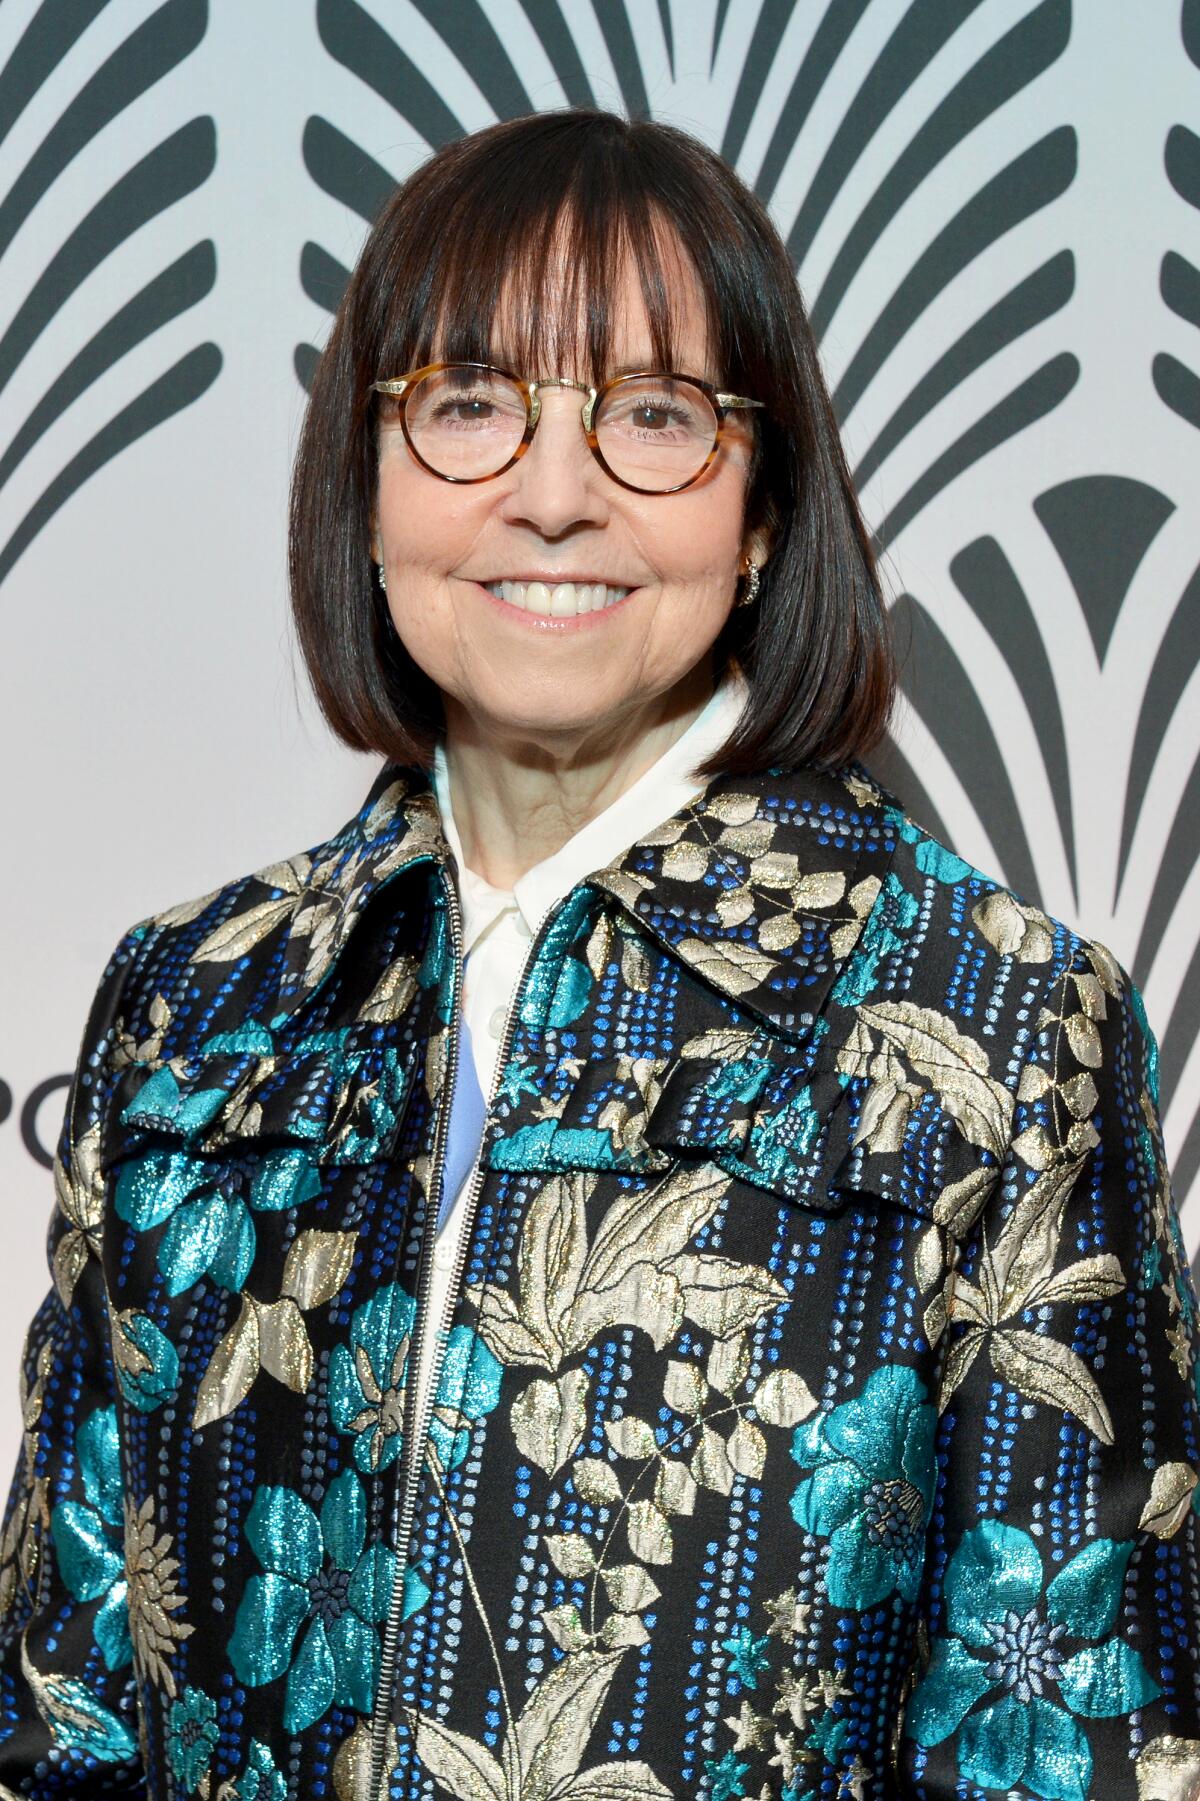 CBS News President Susan Zirinsky smiling in 2019 